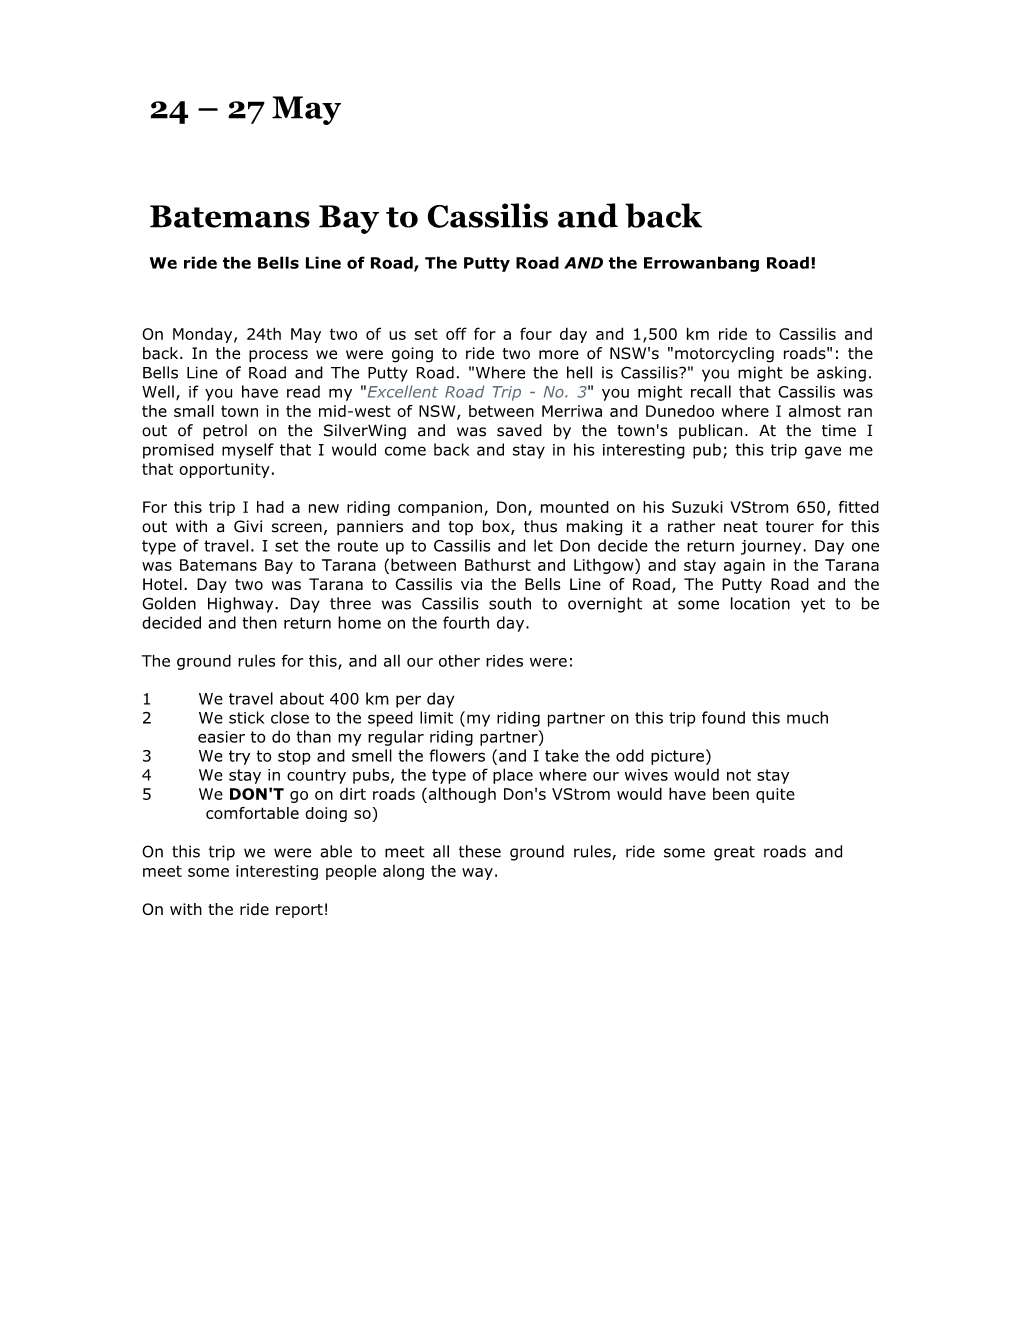 24 – 27 May Batemans Bay to Cassilis and Back